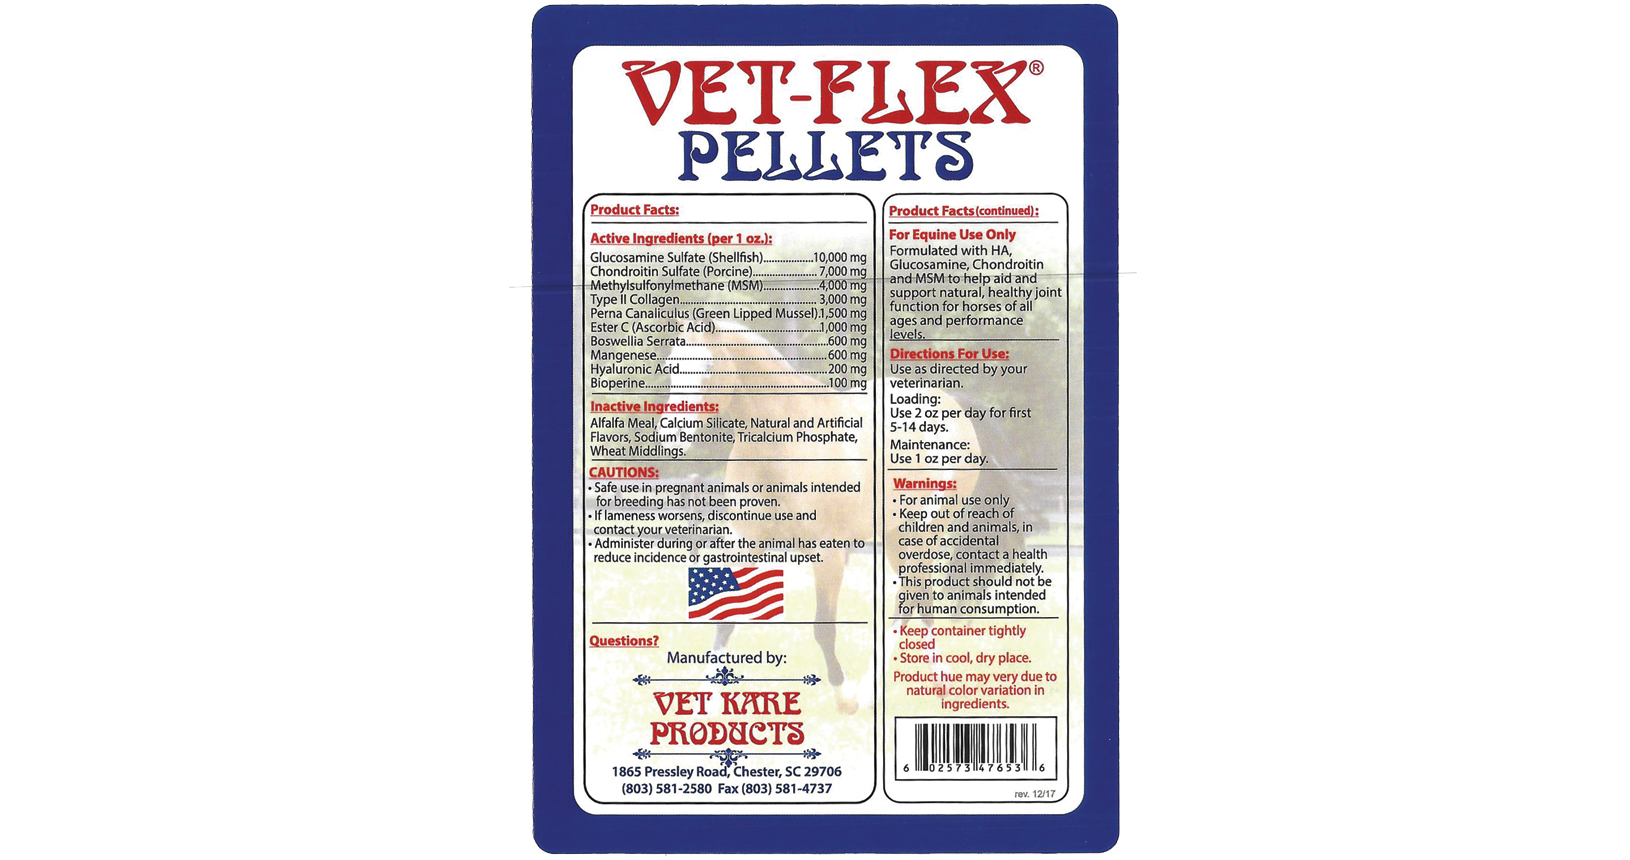 Vet-Flex Pellets – Vet Kare Products